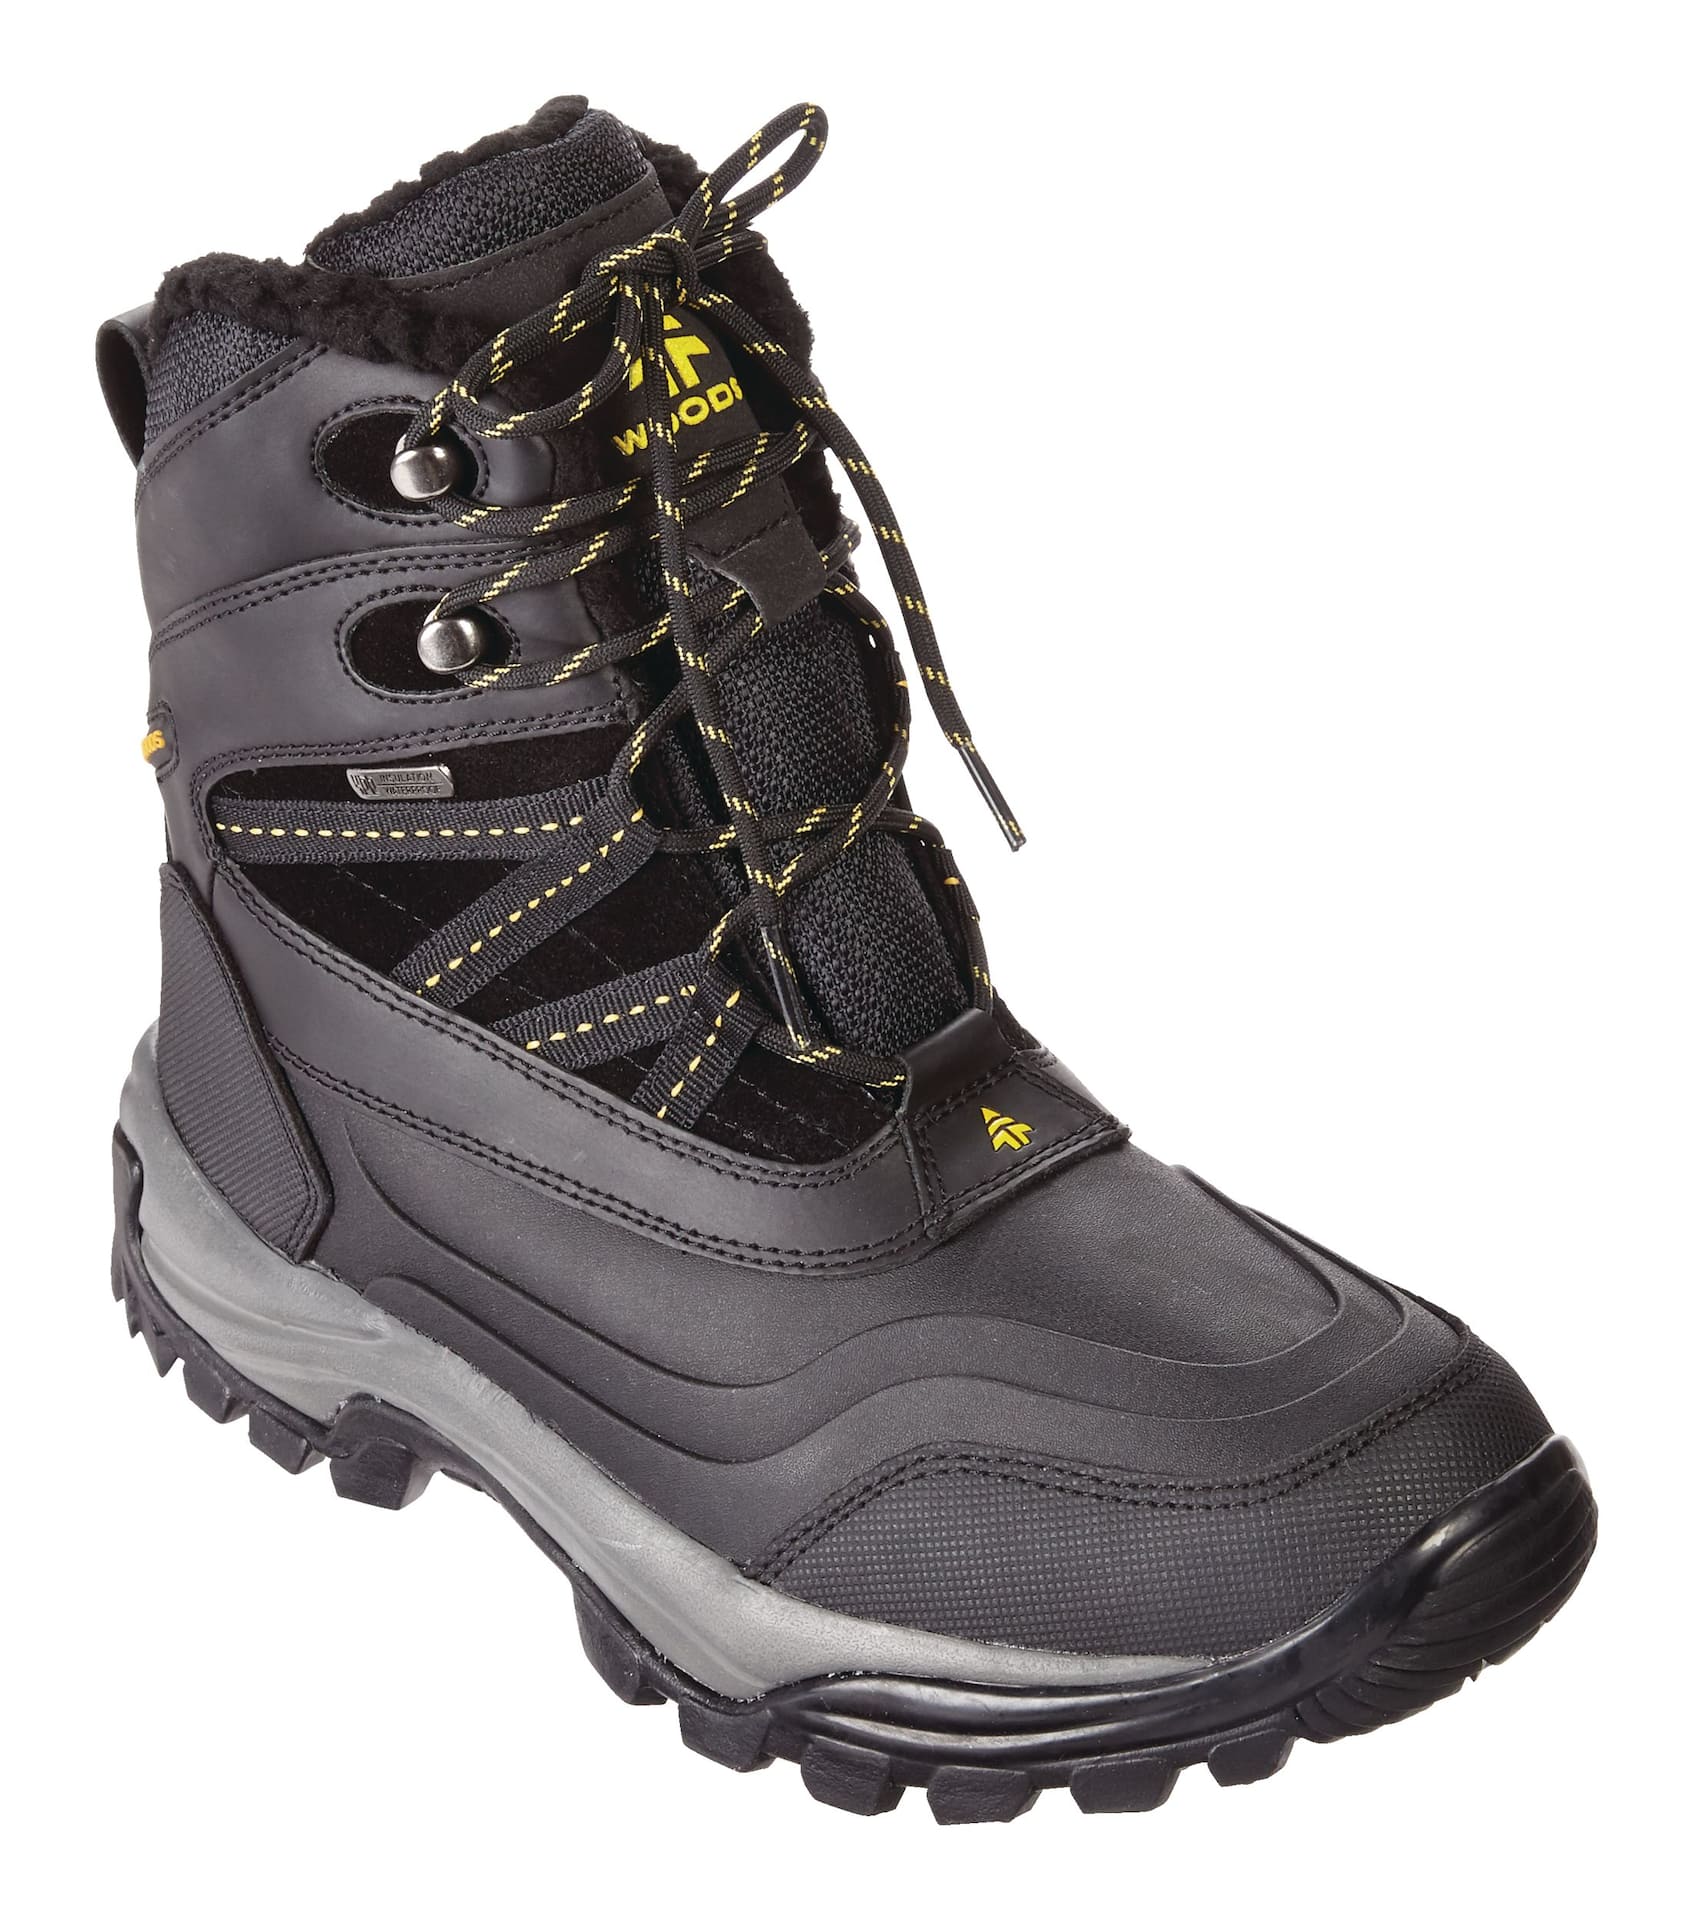 Woods Men's Snow Peak Insulated Leather/Rubber Winter Snow Boots Waterproof  Anti-Slip Warm